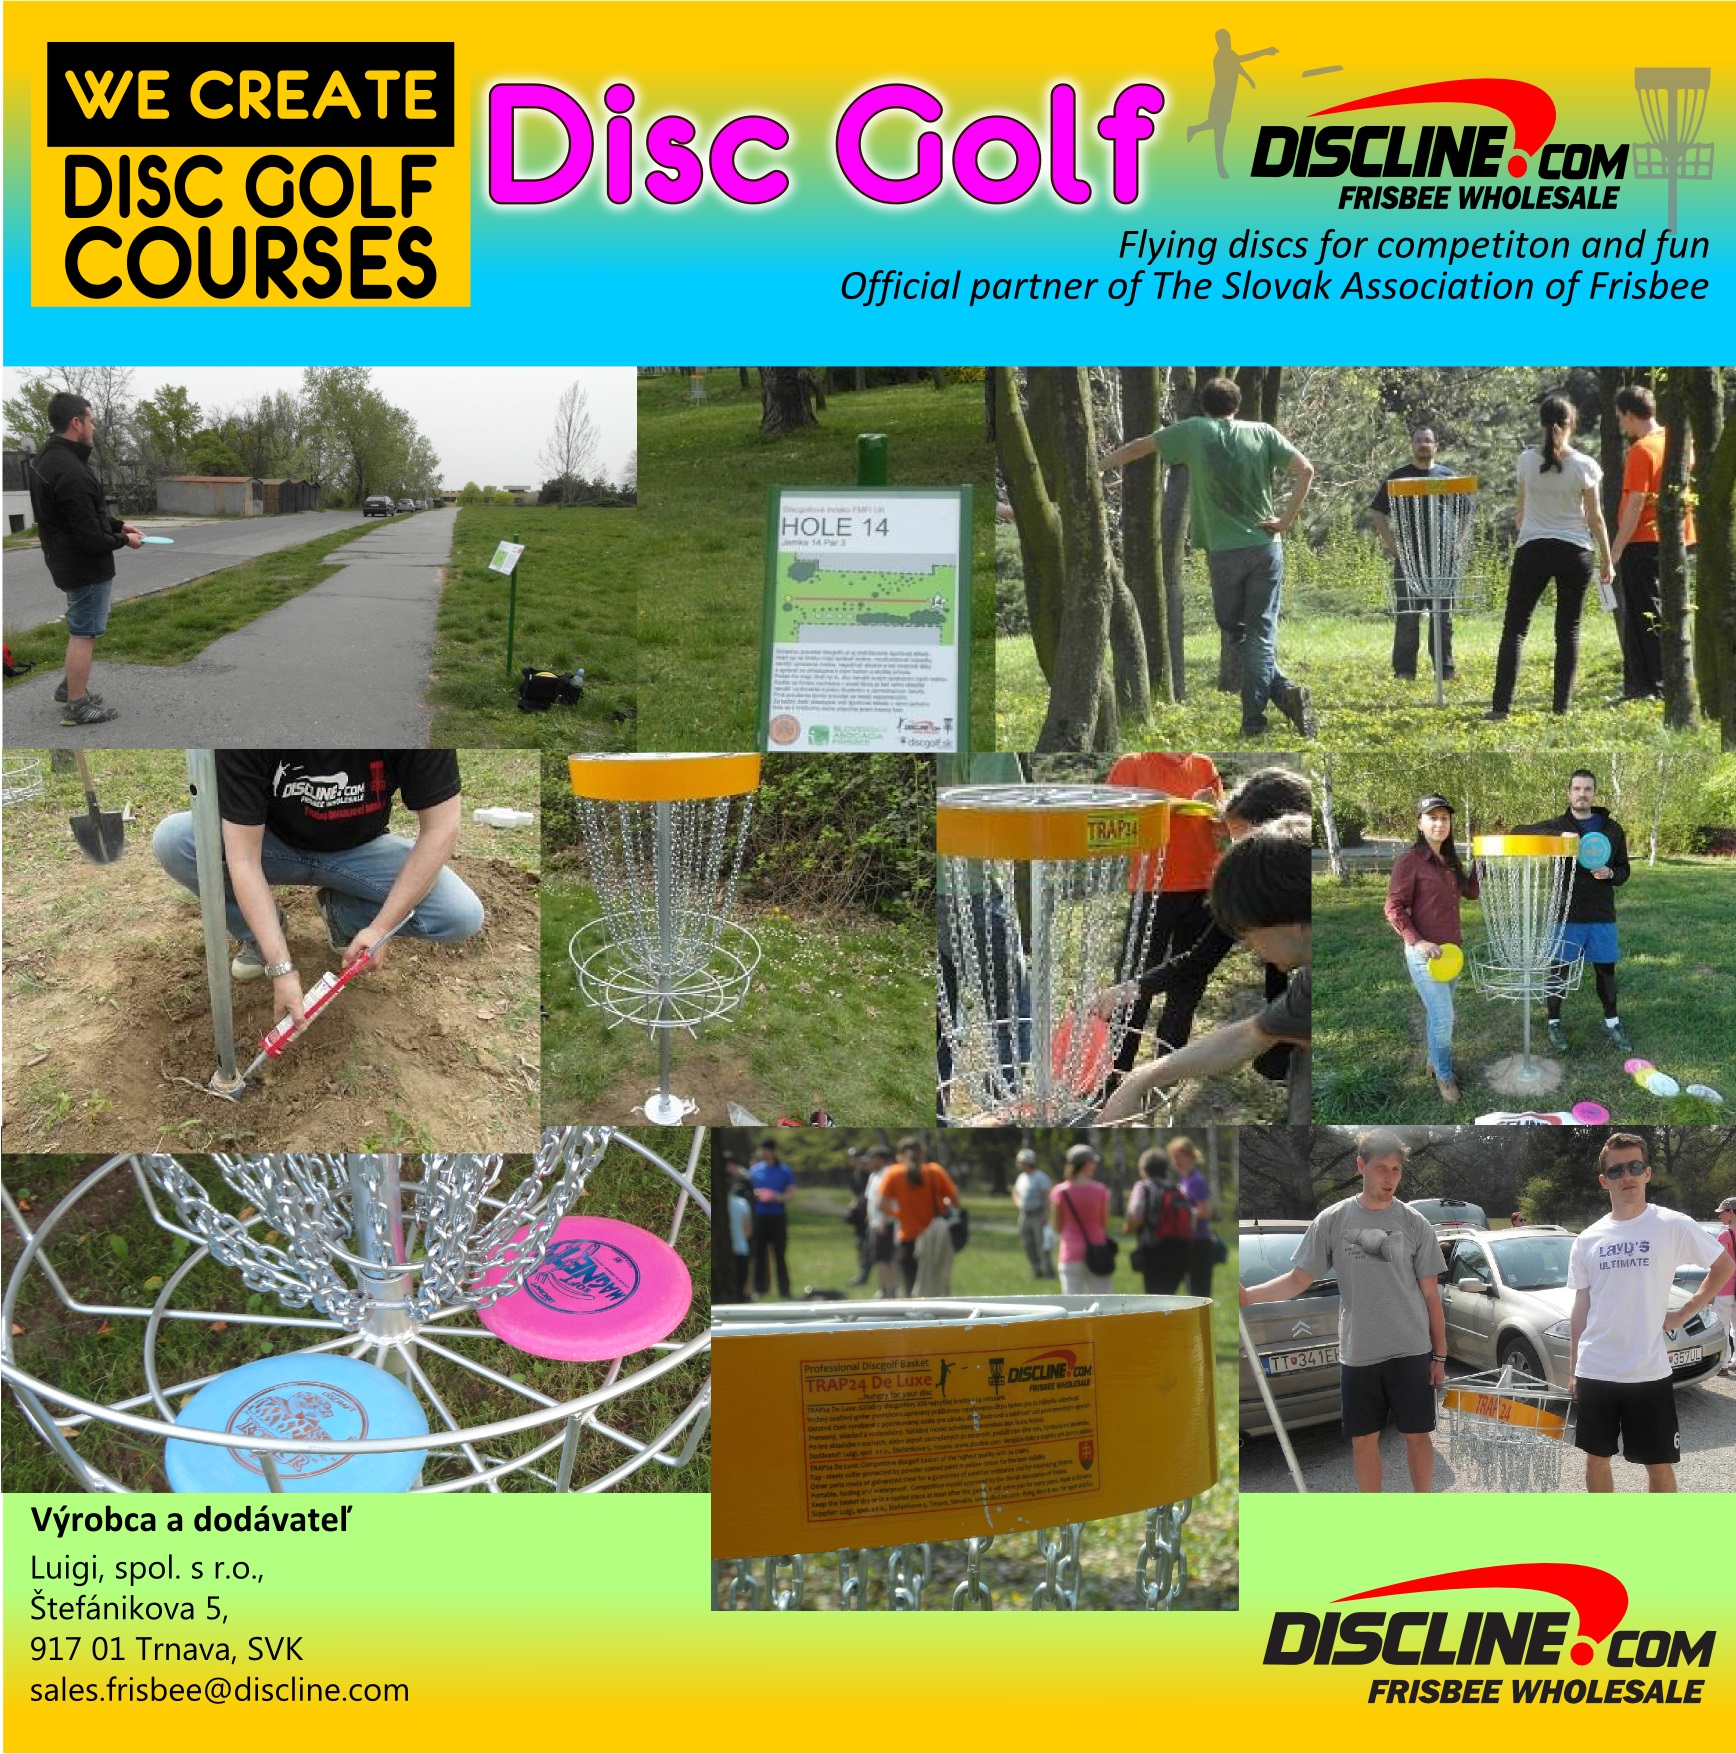 Discgolf course